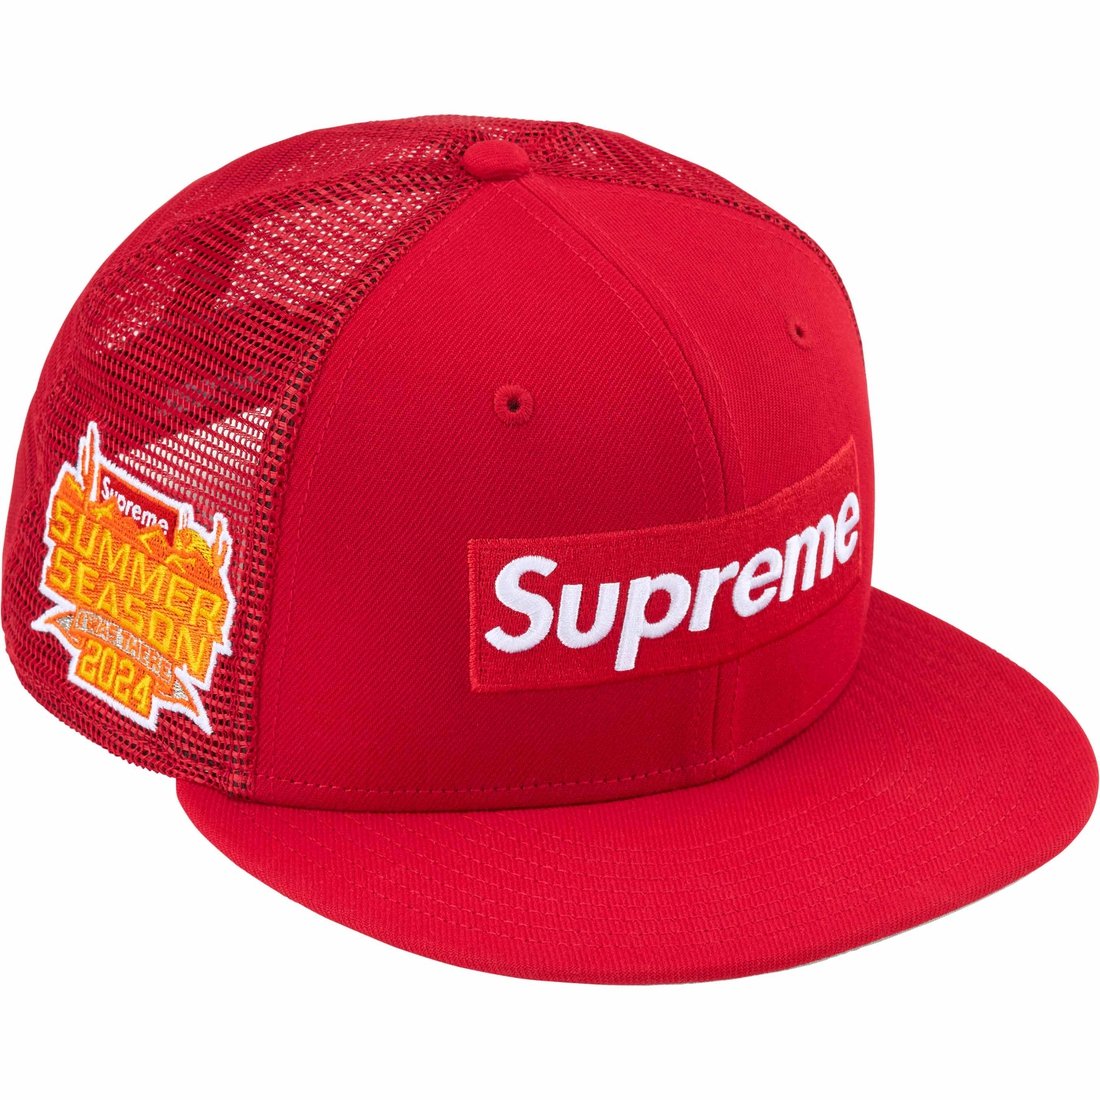 Supreme Box Logo Mesh Back New Era Red